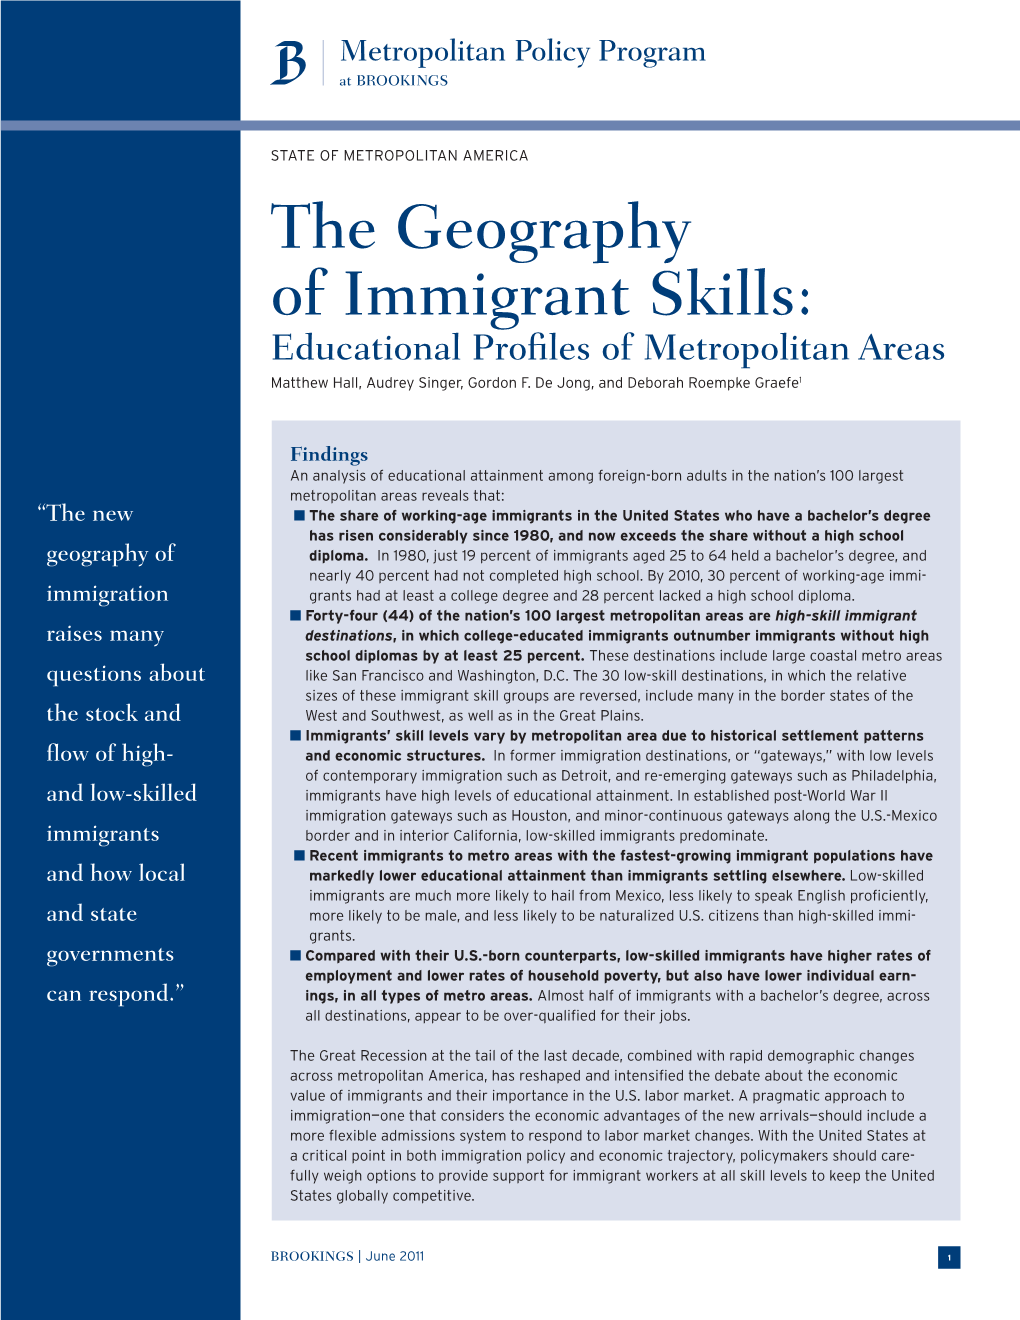 The Geography of Immigrant Skills: Educational Profiles of Metropolitan Areas Matthew Hall, Audrey Singer, Gordon F